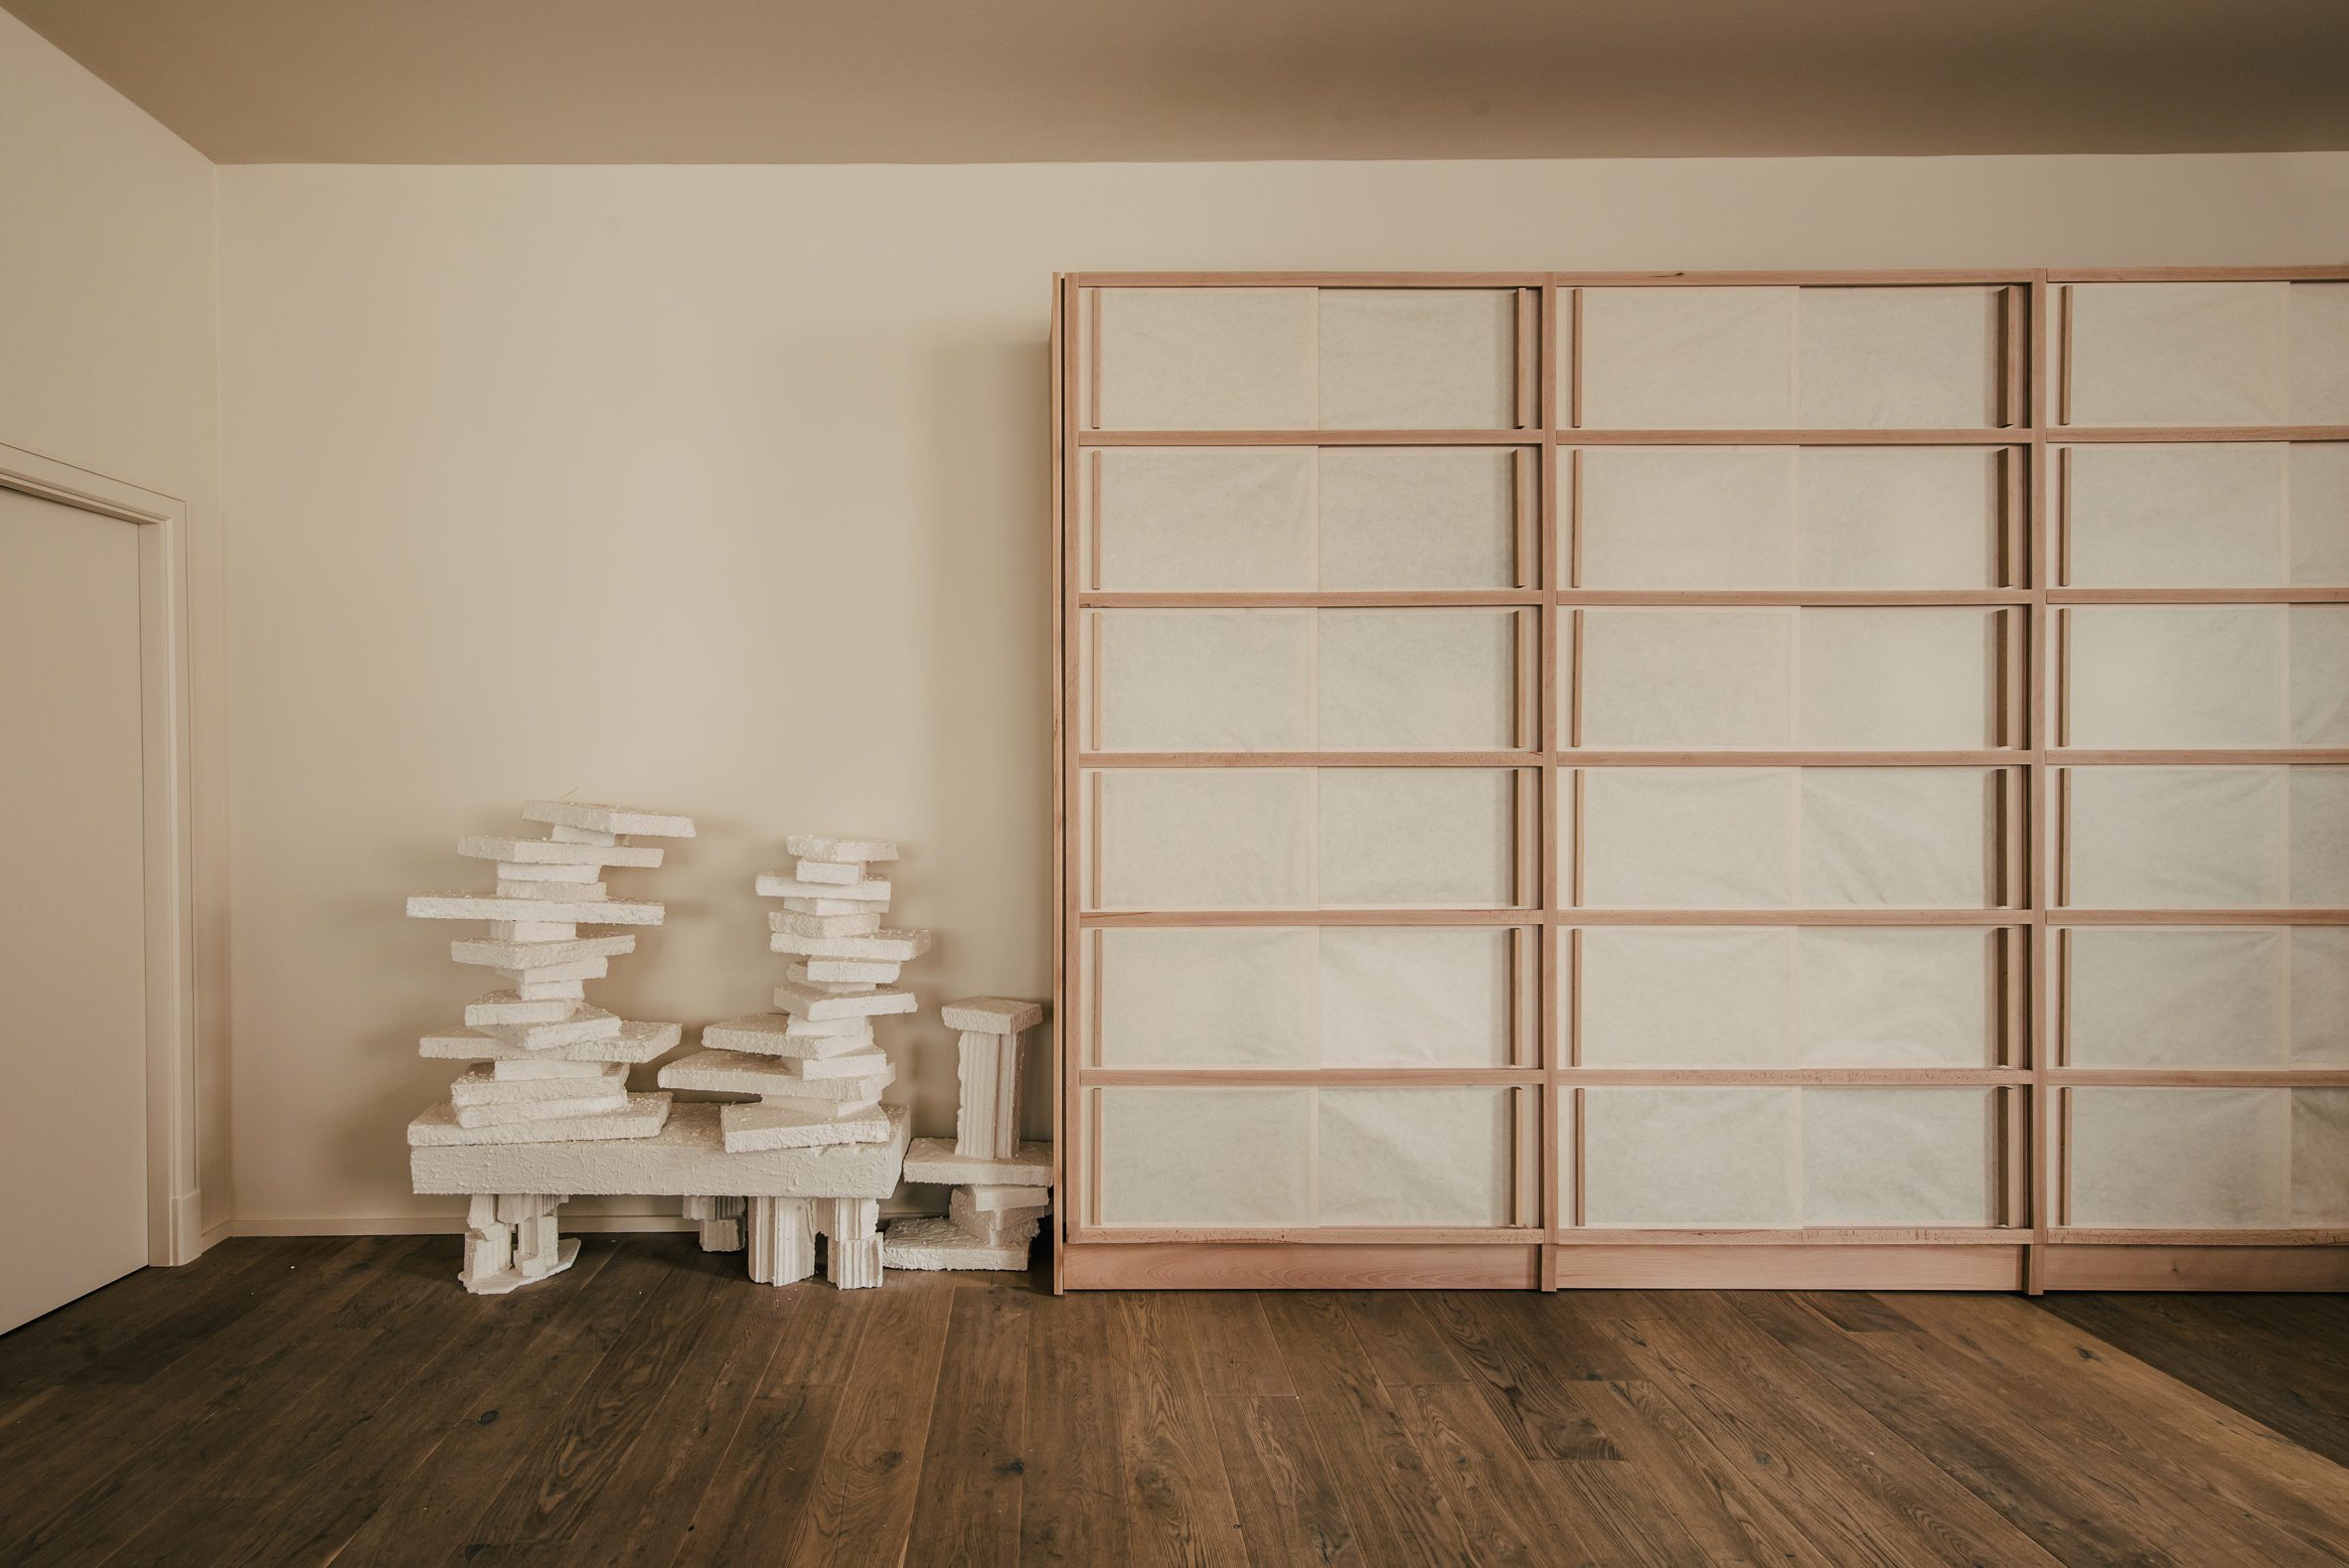 Completedworks studio designed by Hollie Bowden features minimalist interior